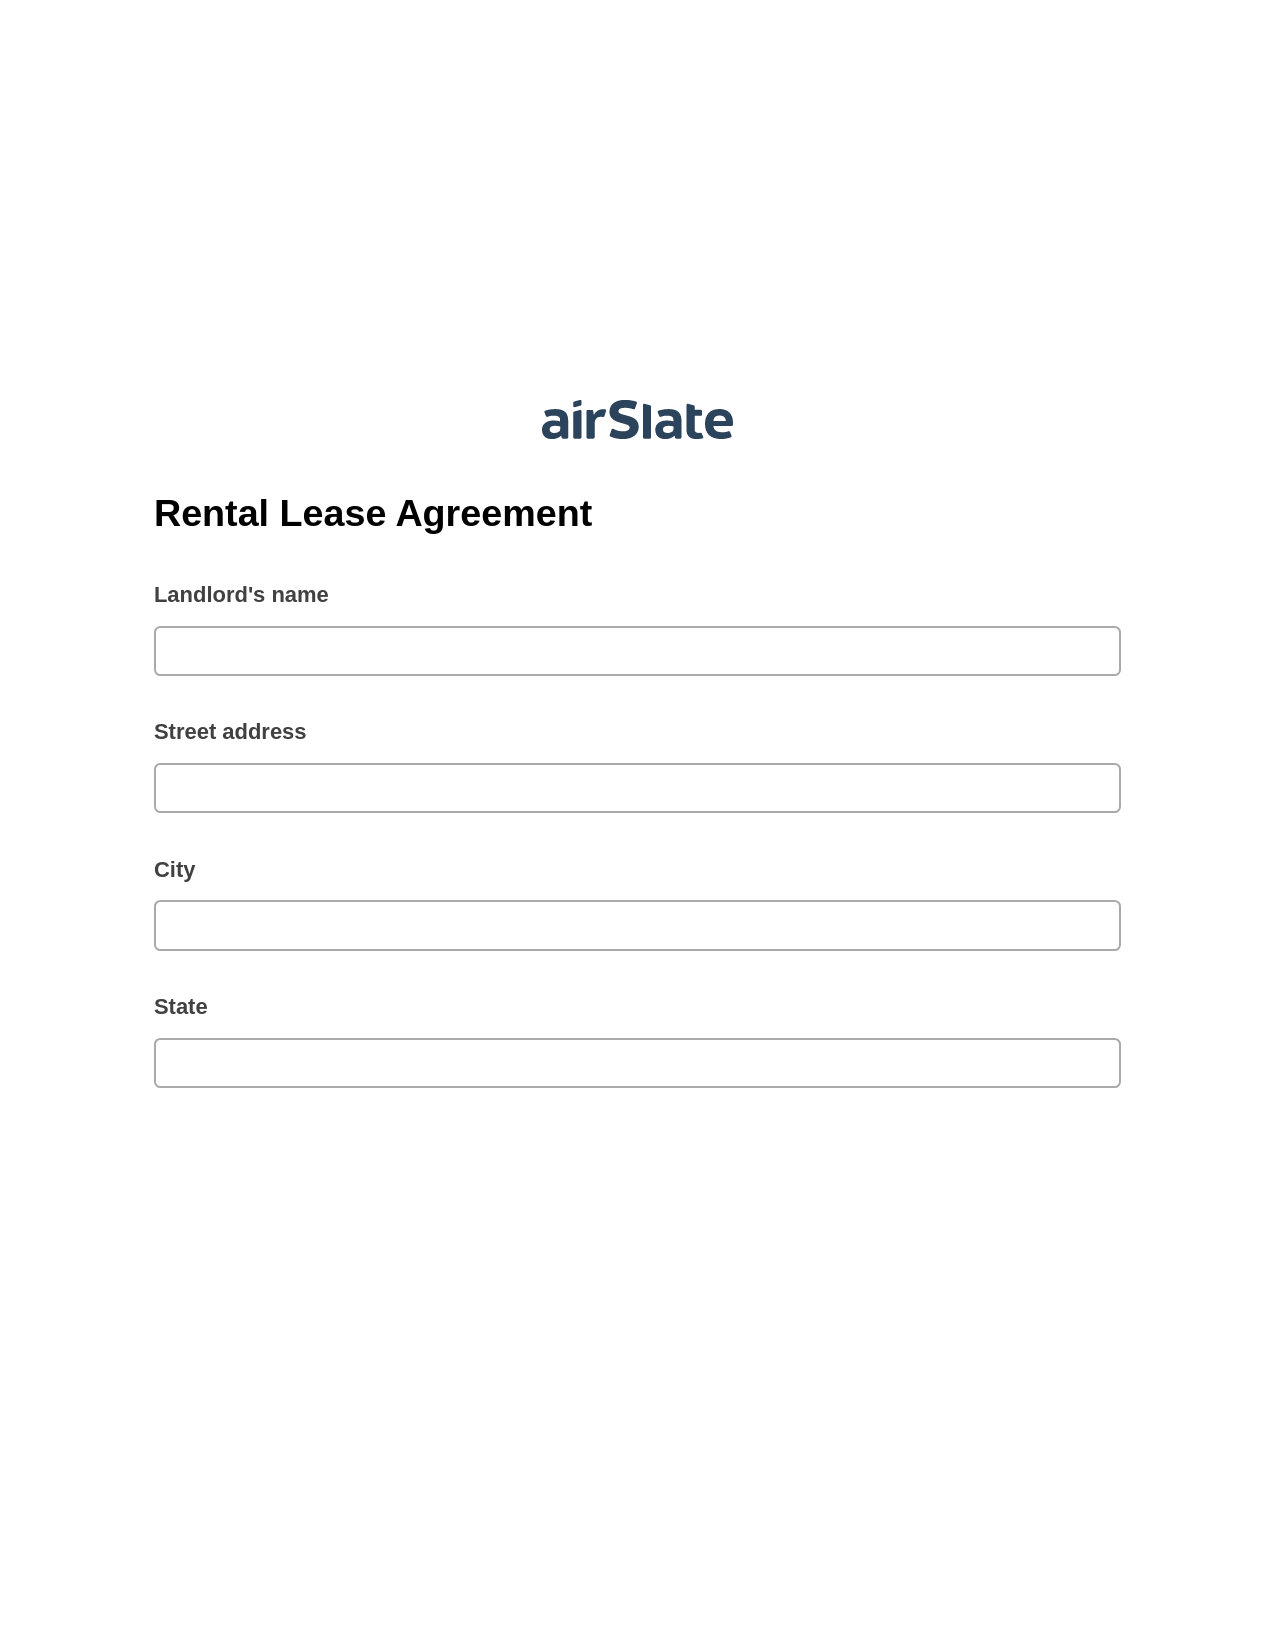 Multirole Rental Lease Agreement Pre-fill from Google Sheet Dropdown Options Bot, Jira Bot, Slack Two-Way Binding Bot